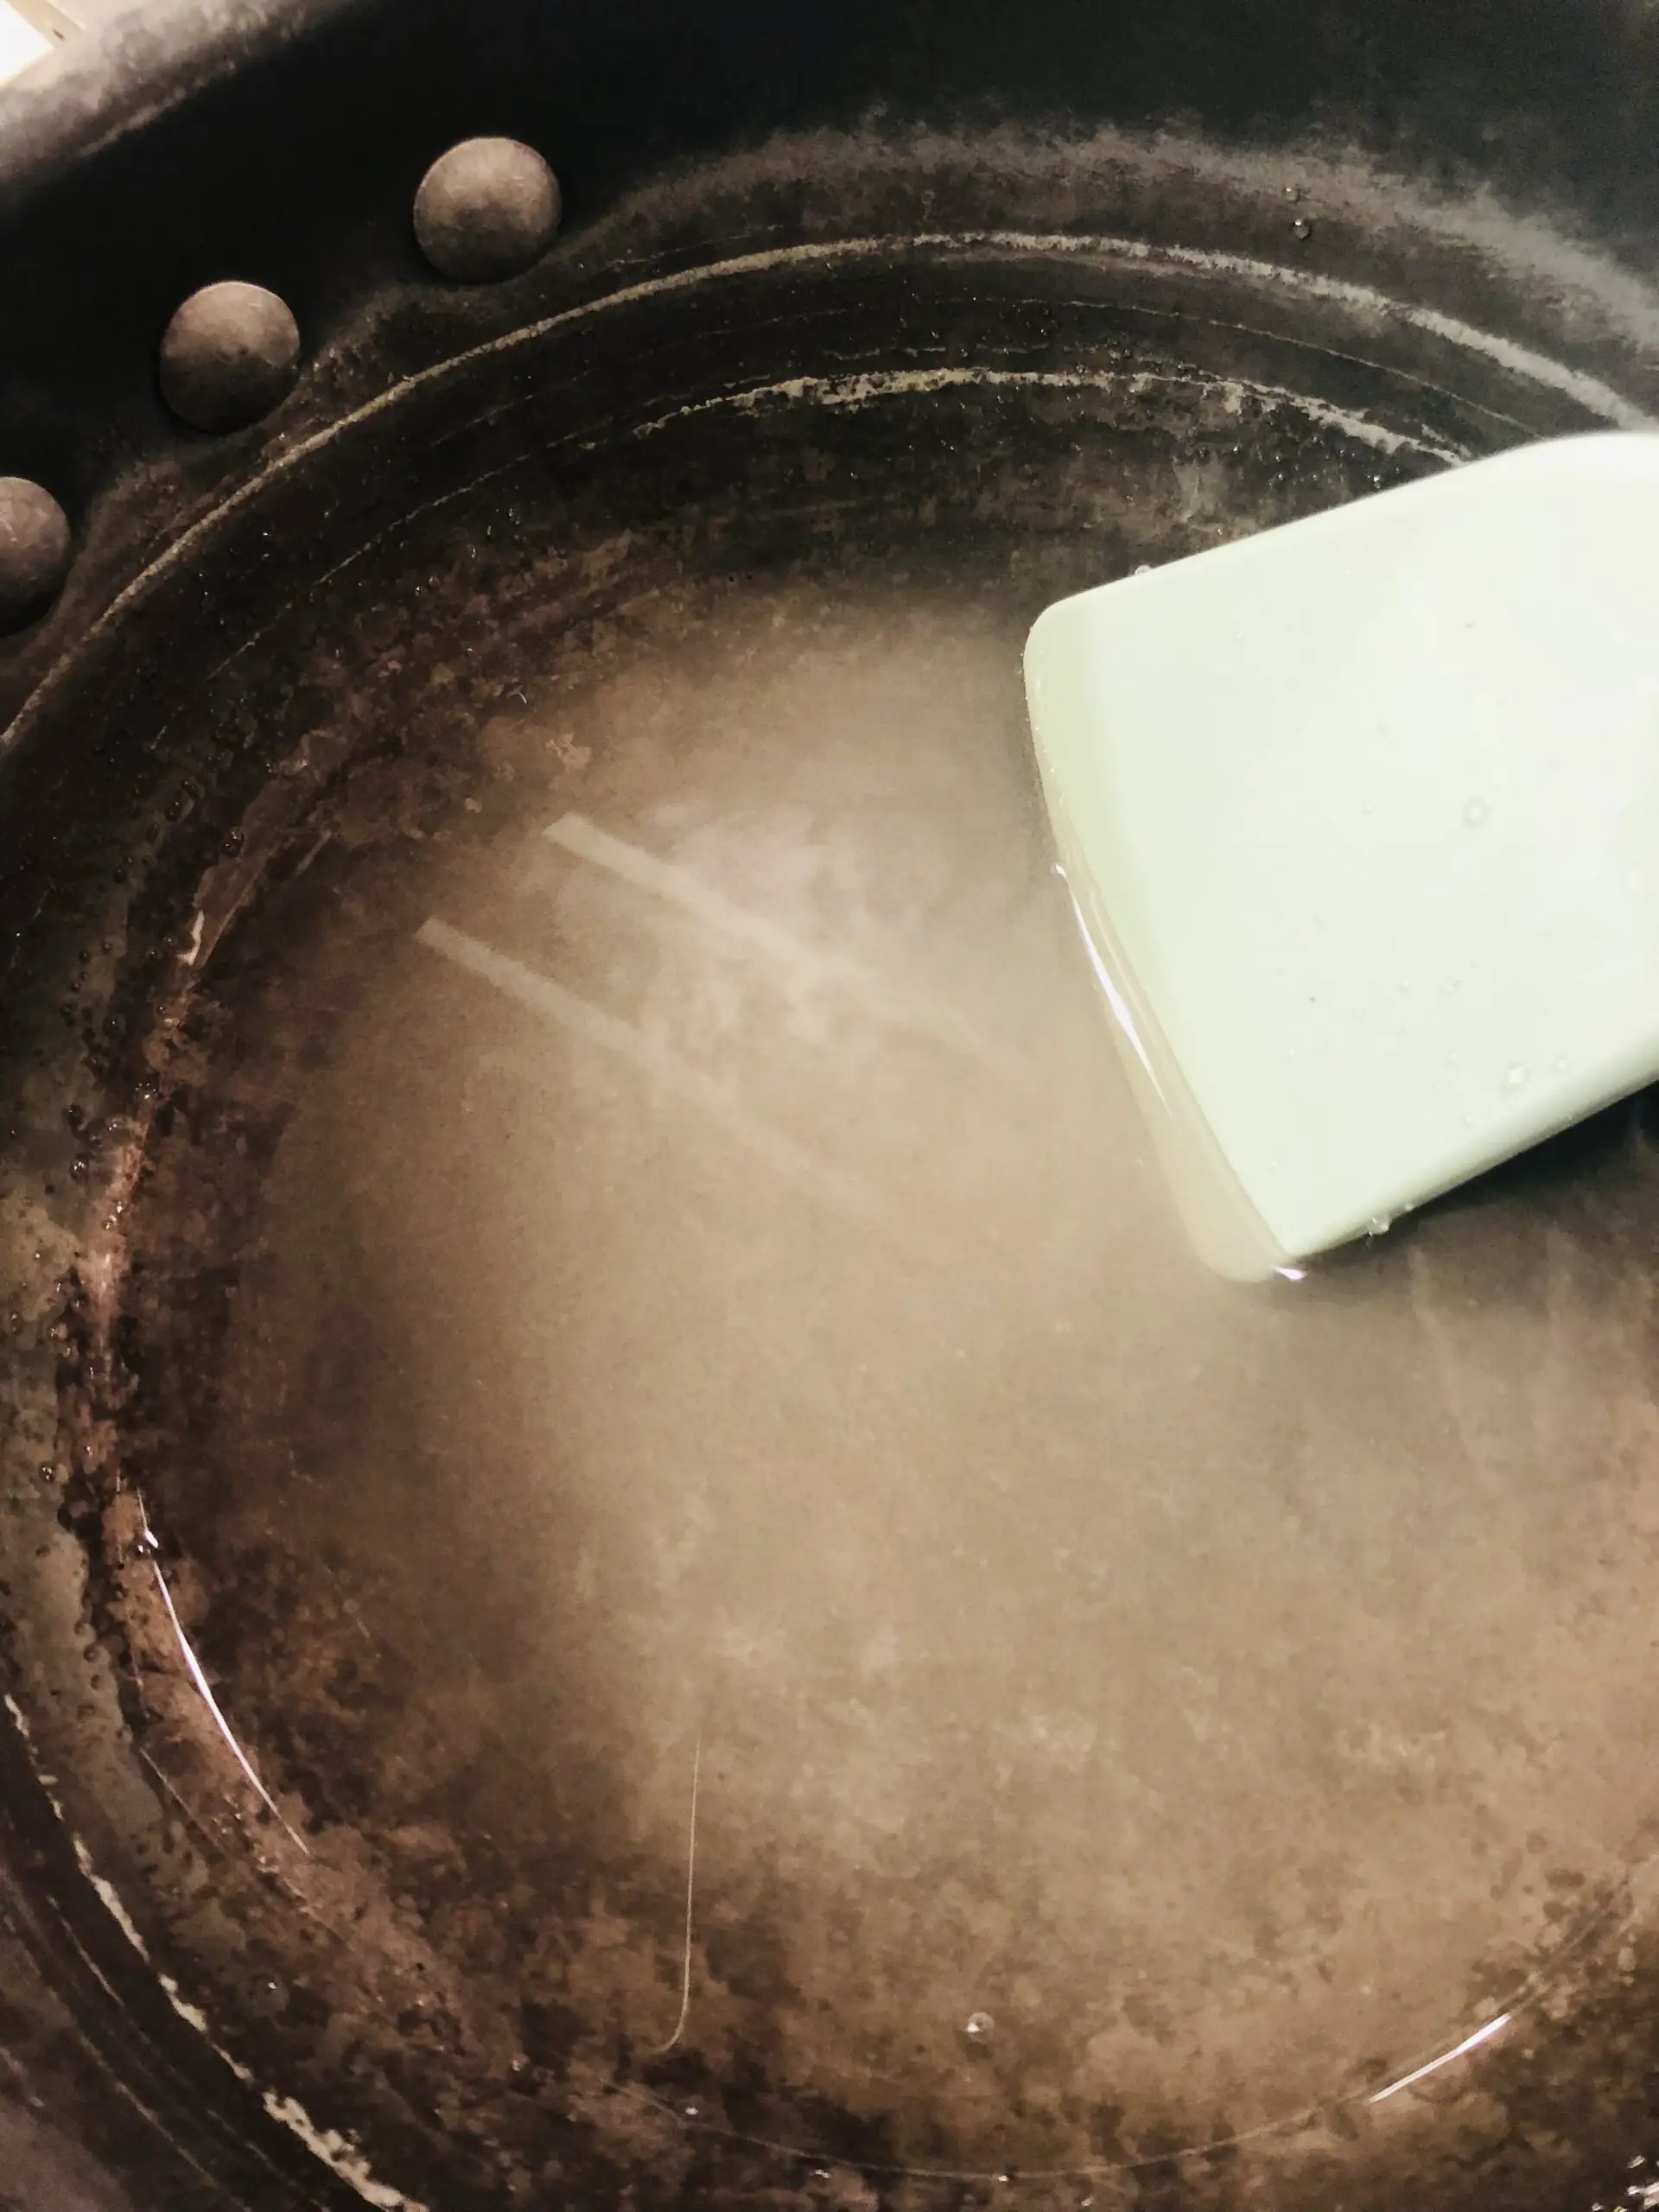 Sugar dissolved in vinegar in a saucepan with a blue utensil.